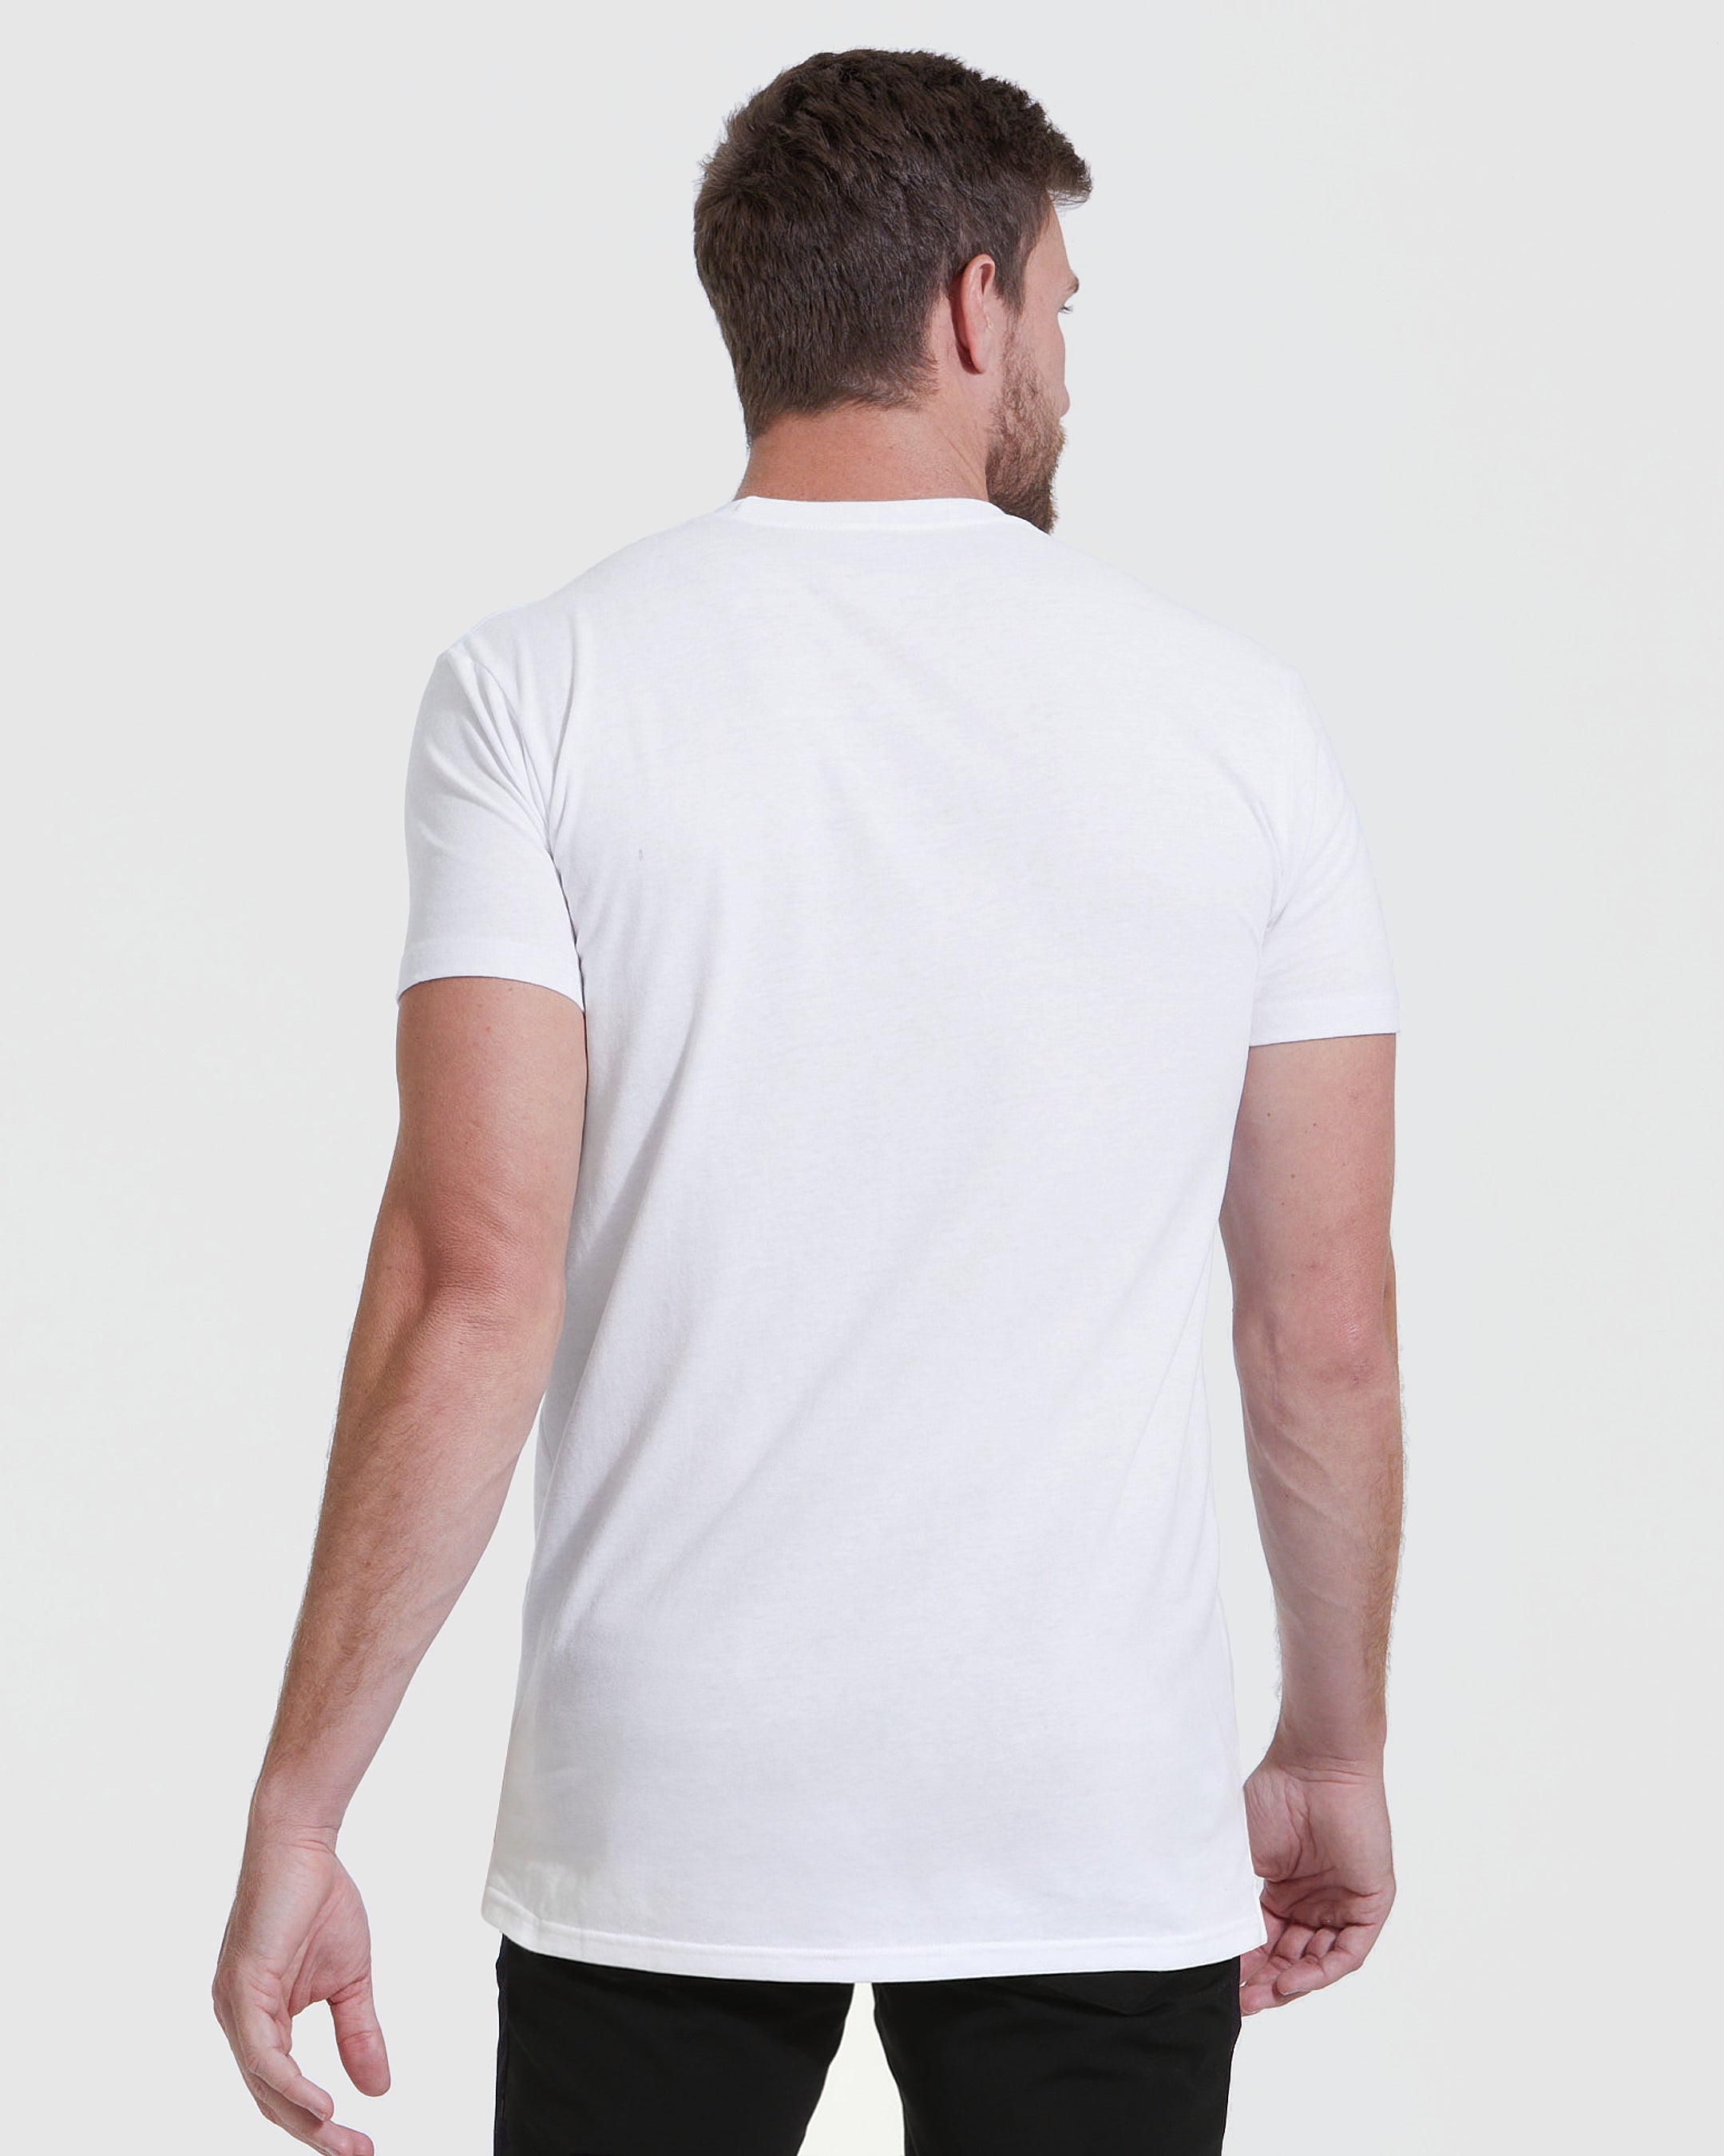 All-White Tall Straight Hem T-Shirt 3-Pack